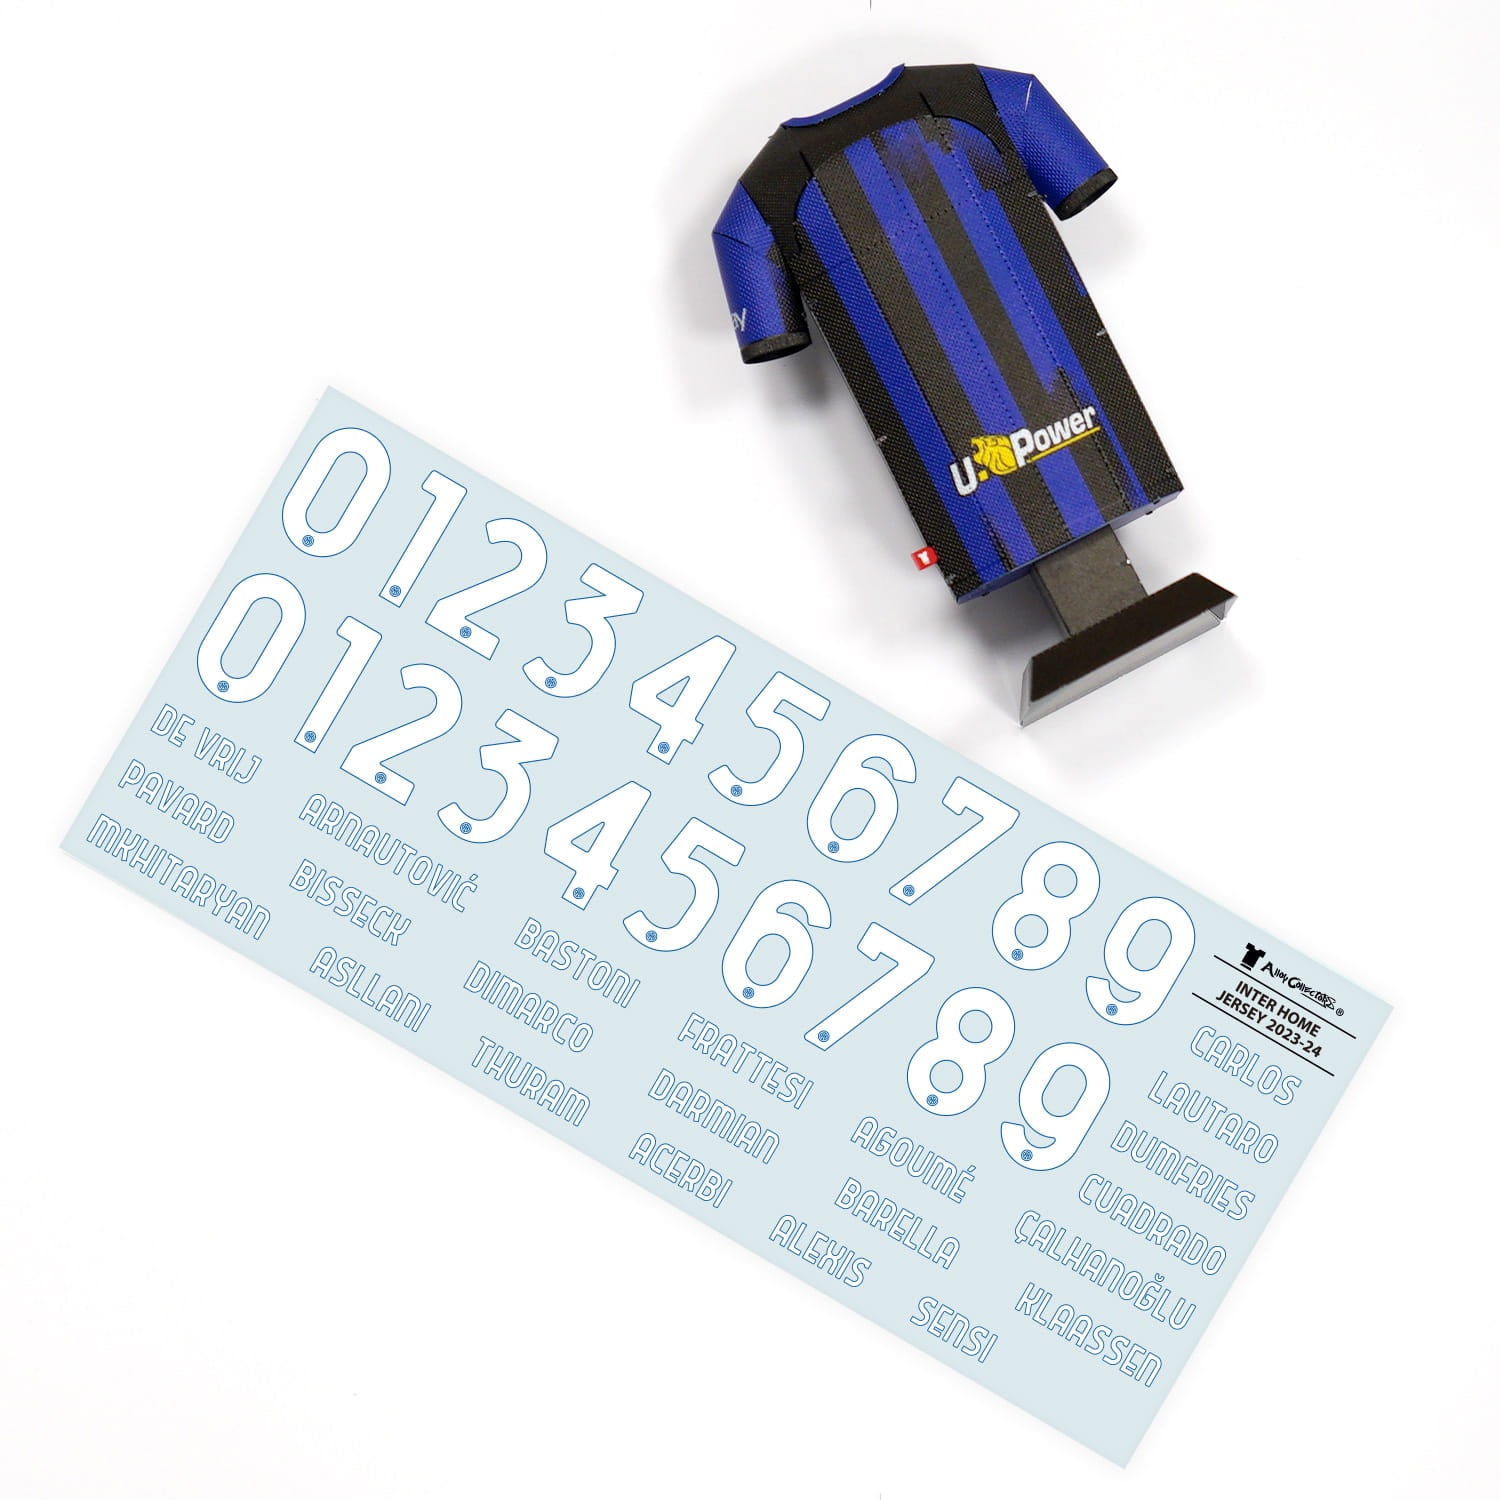 Inter Milan home shirt decal sheet 